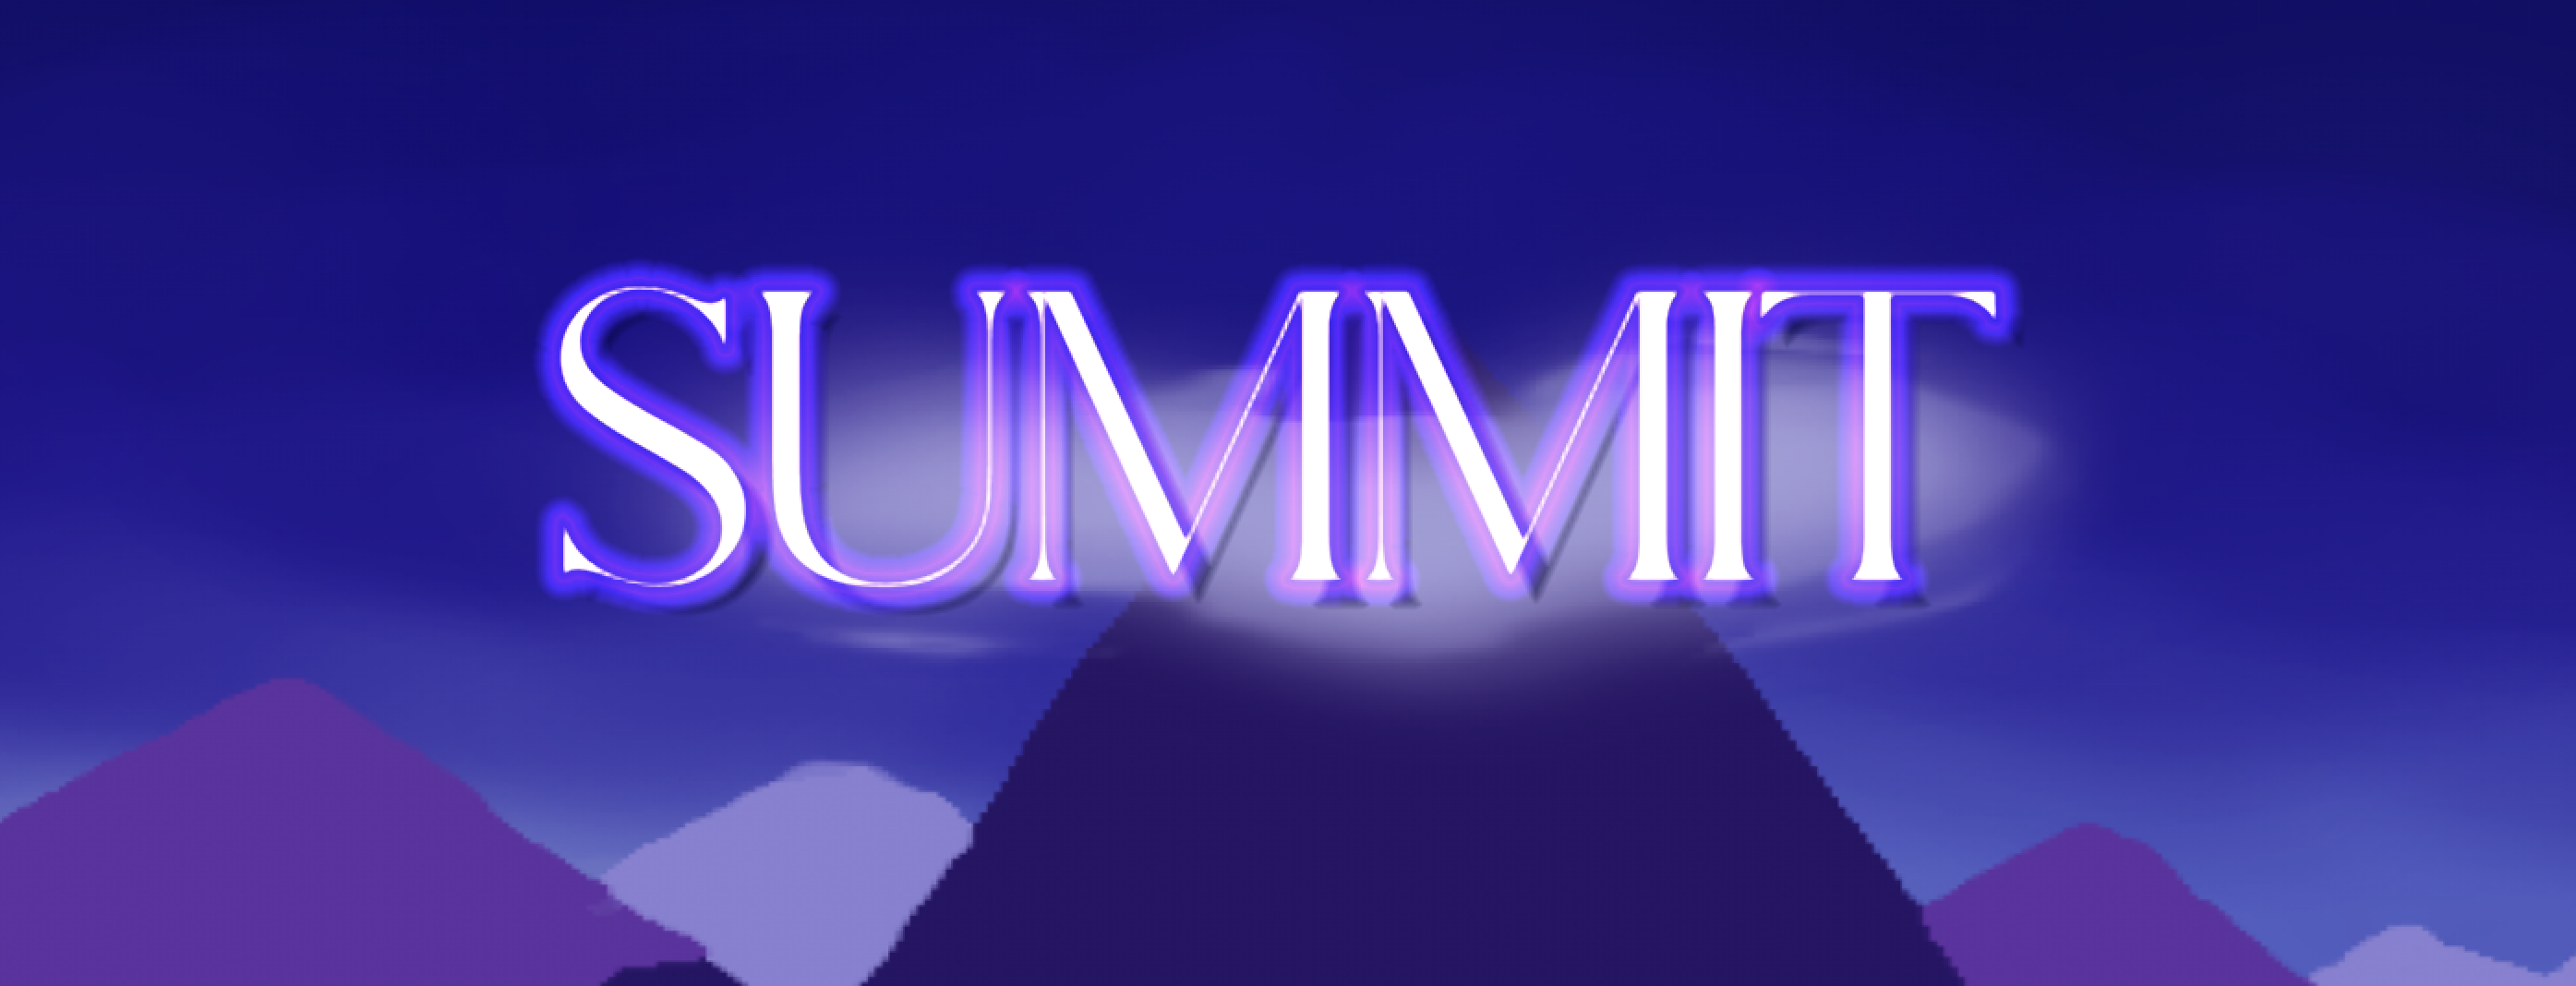 SUMMIT - The Demo